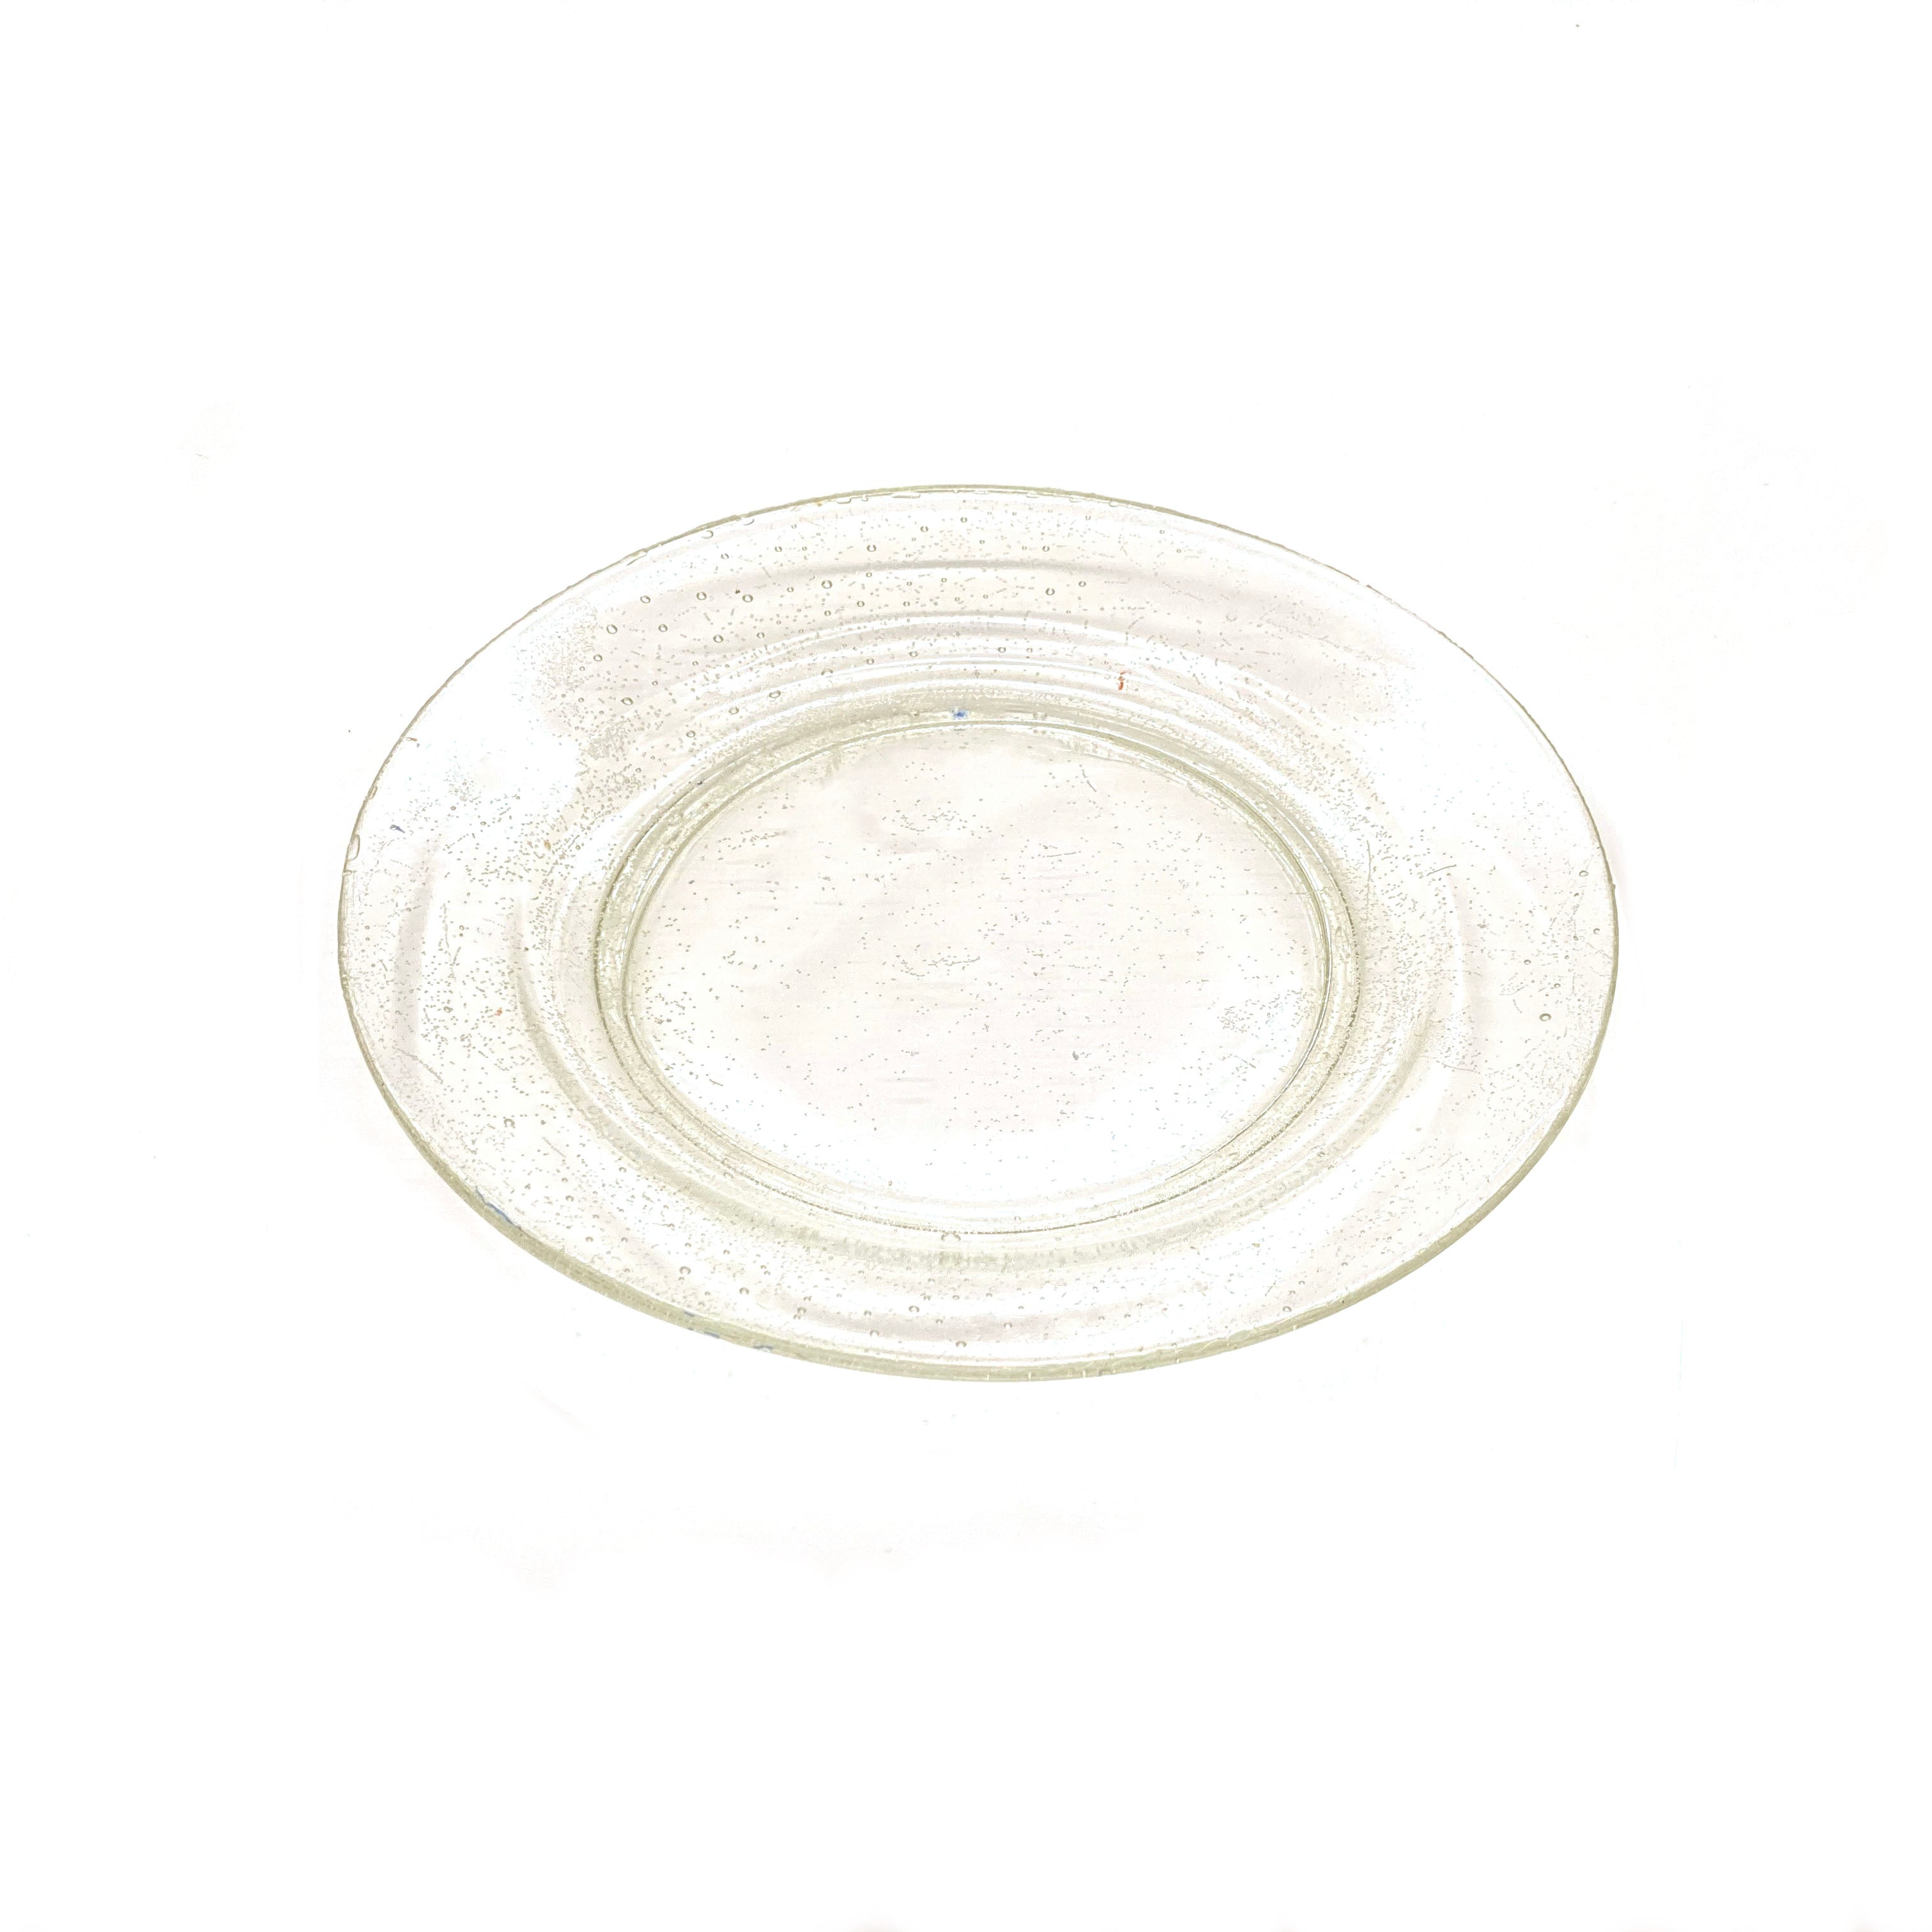 SMASHProps Breakaway Medium Dinner Plate - CLEAR - Clear,Translucent